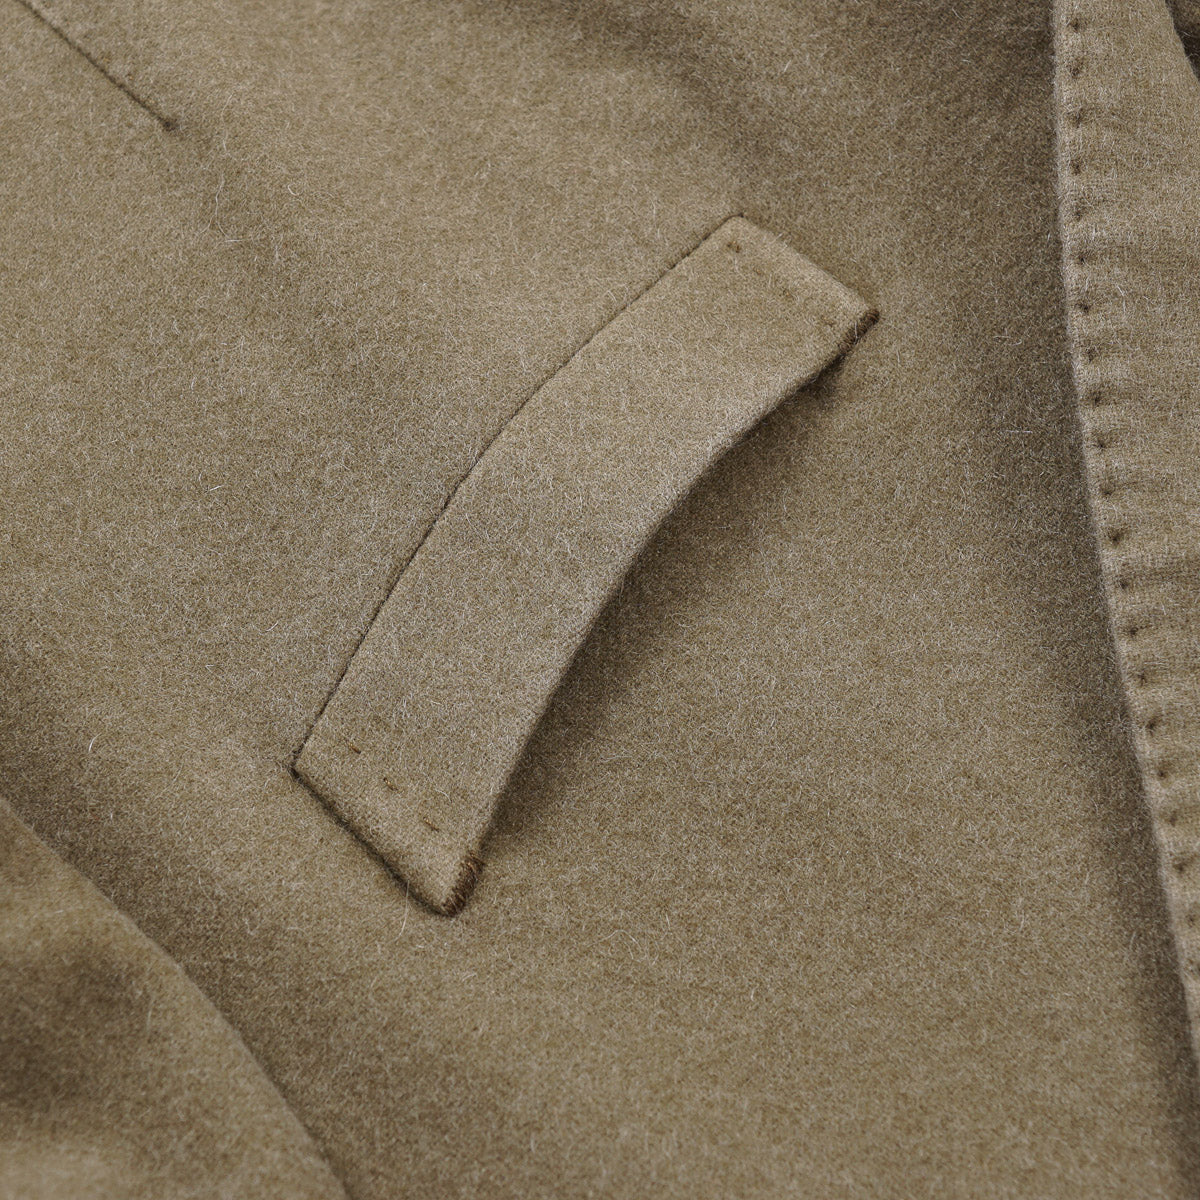 Boglioli Pure Cashmere K-Jacket Sport Coat - Top Shelf Apparel